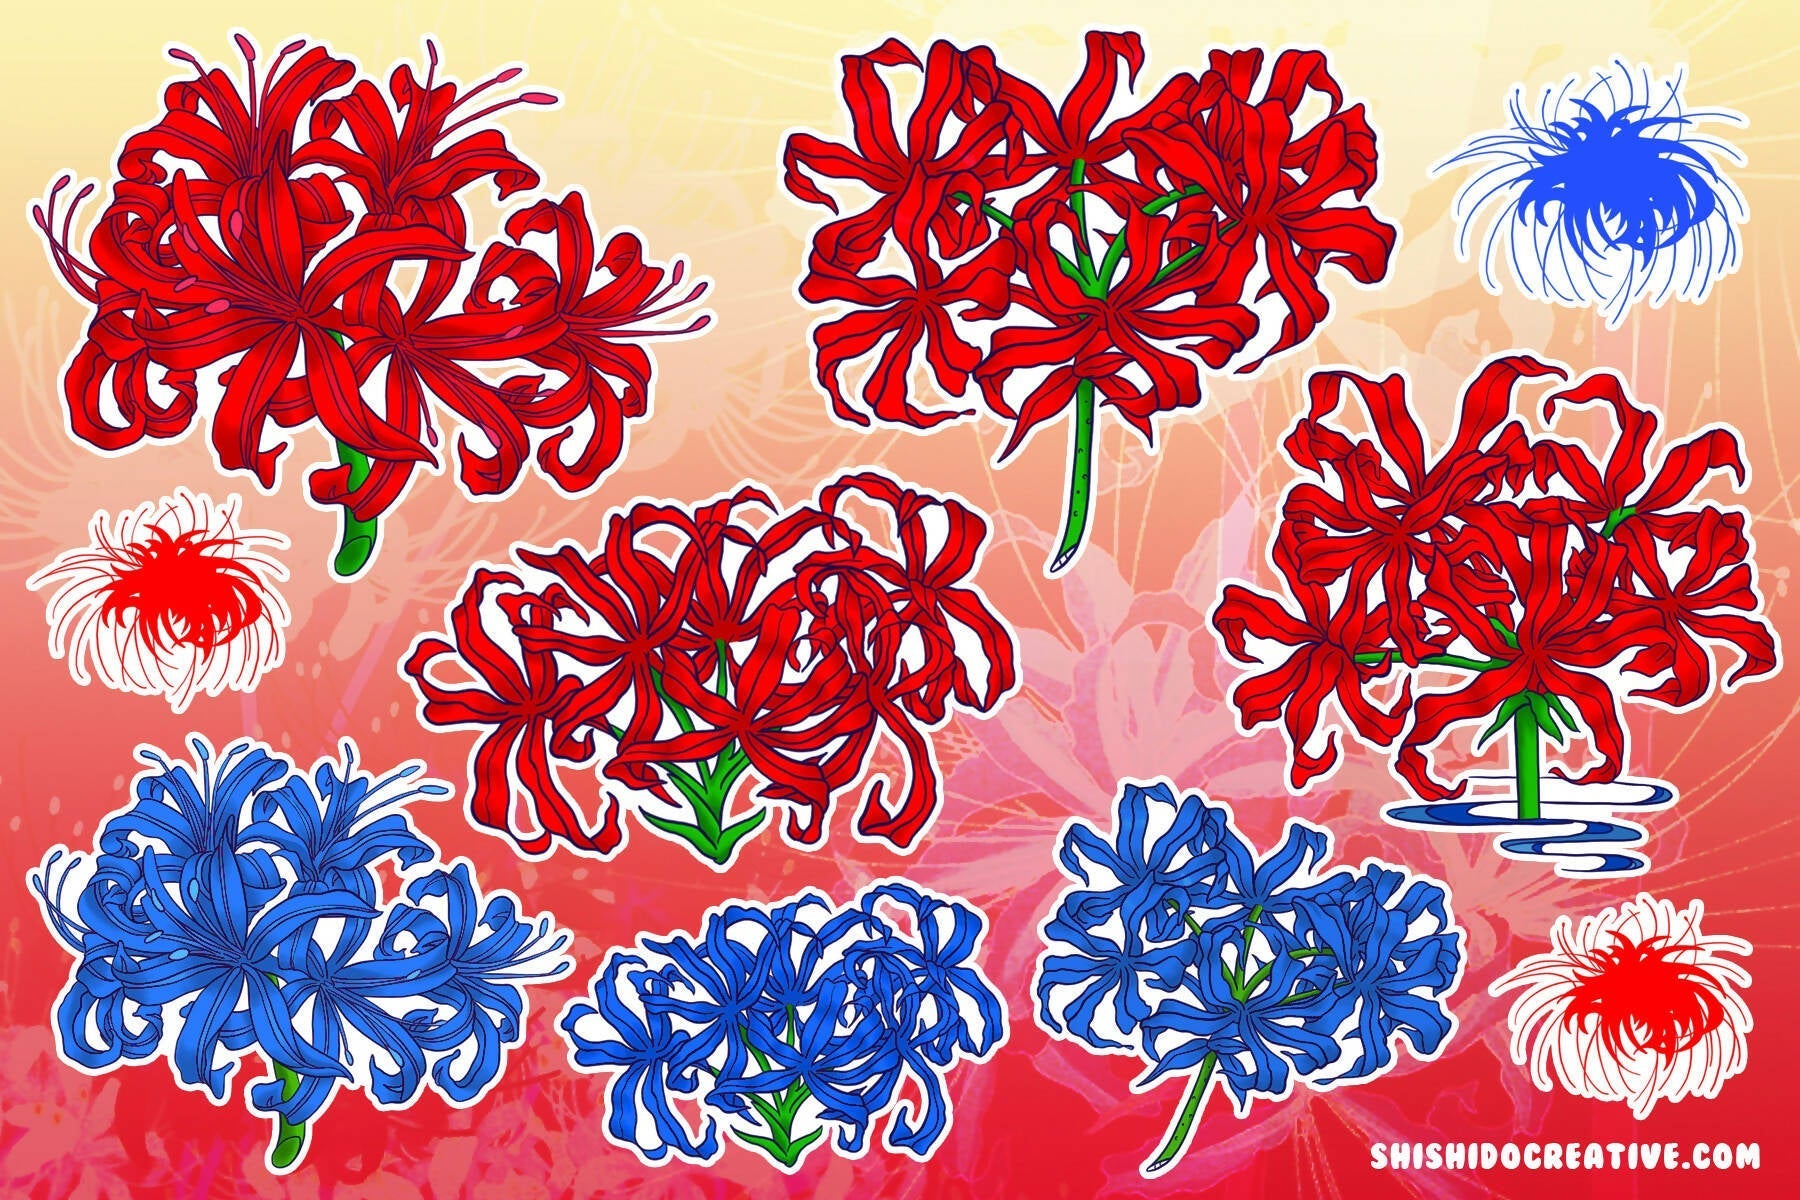 Japanese Spider Lilies Higanbana Flowers Sticker Sheet • 4x6" Planner Stickers